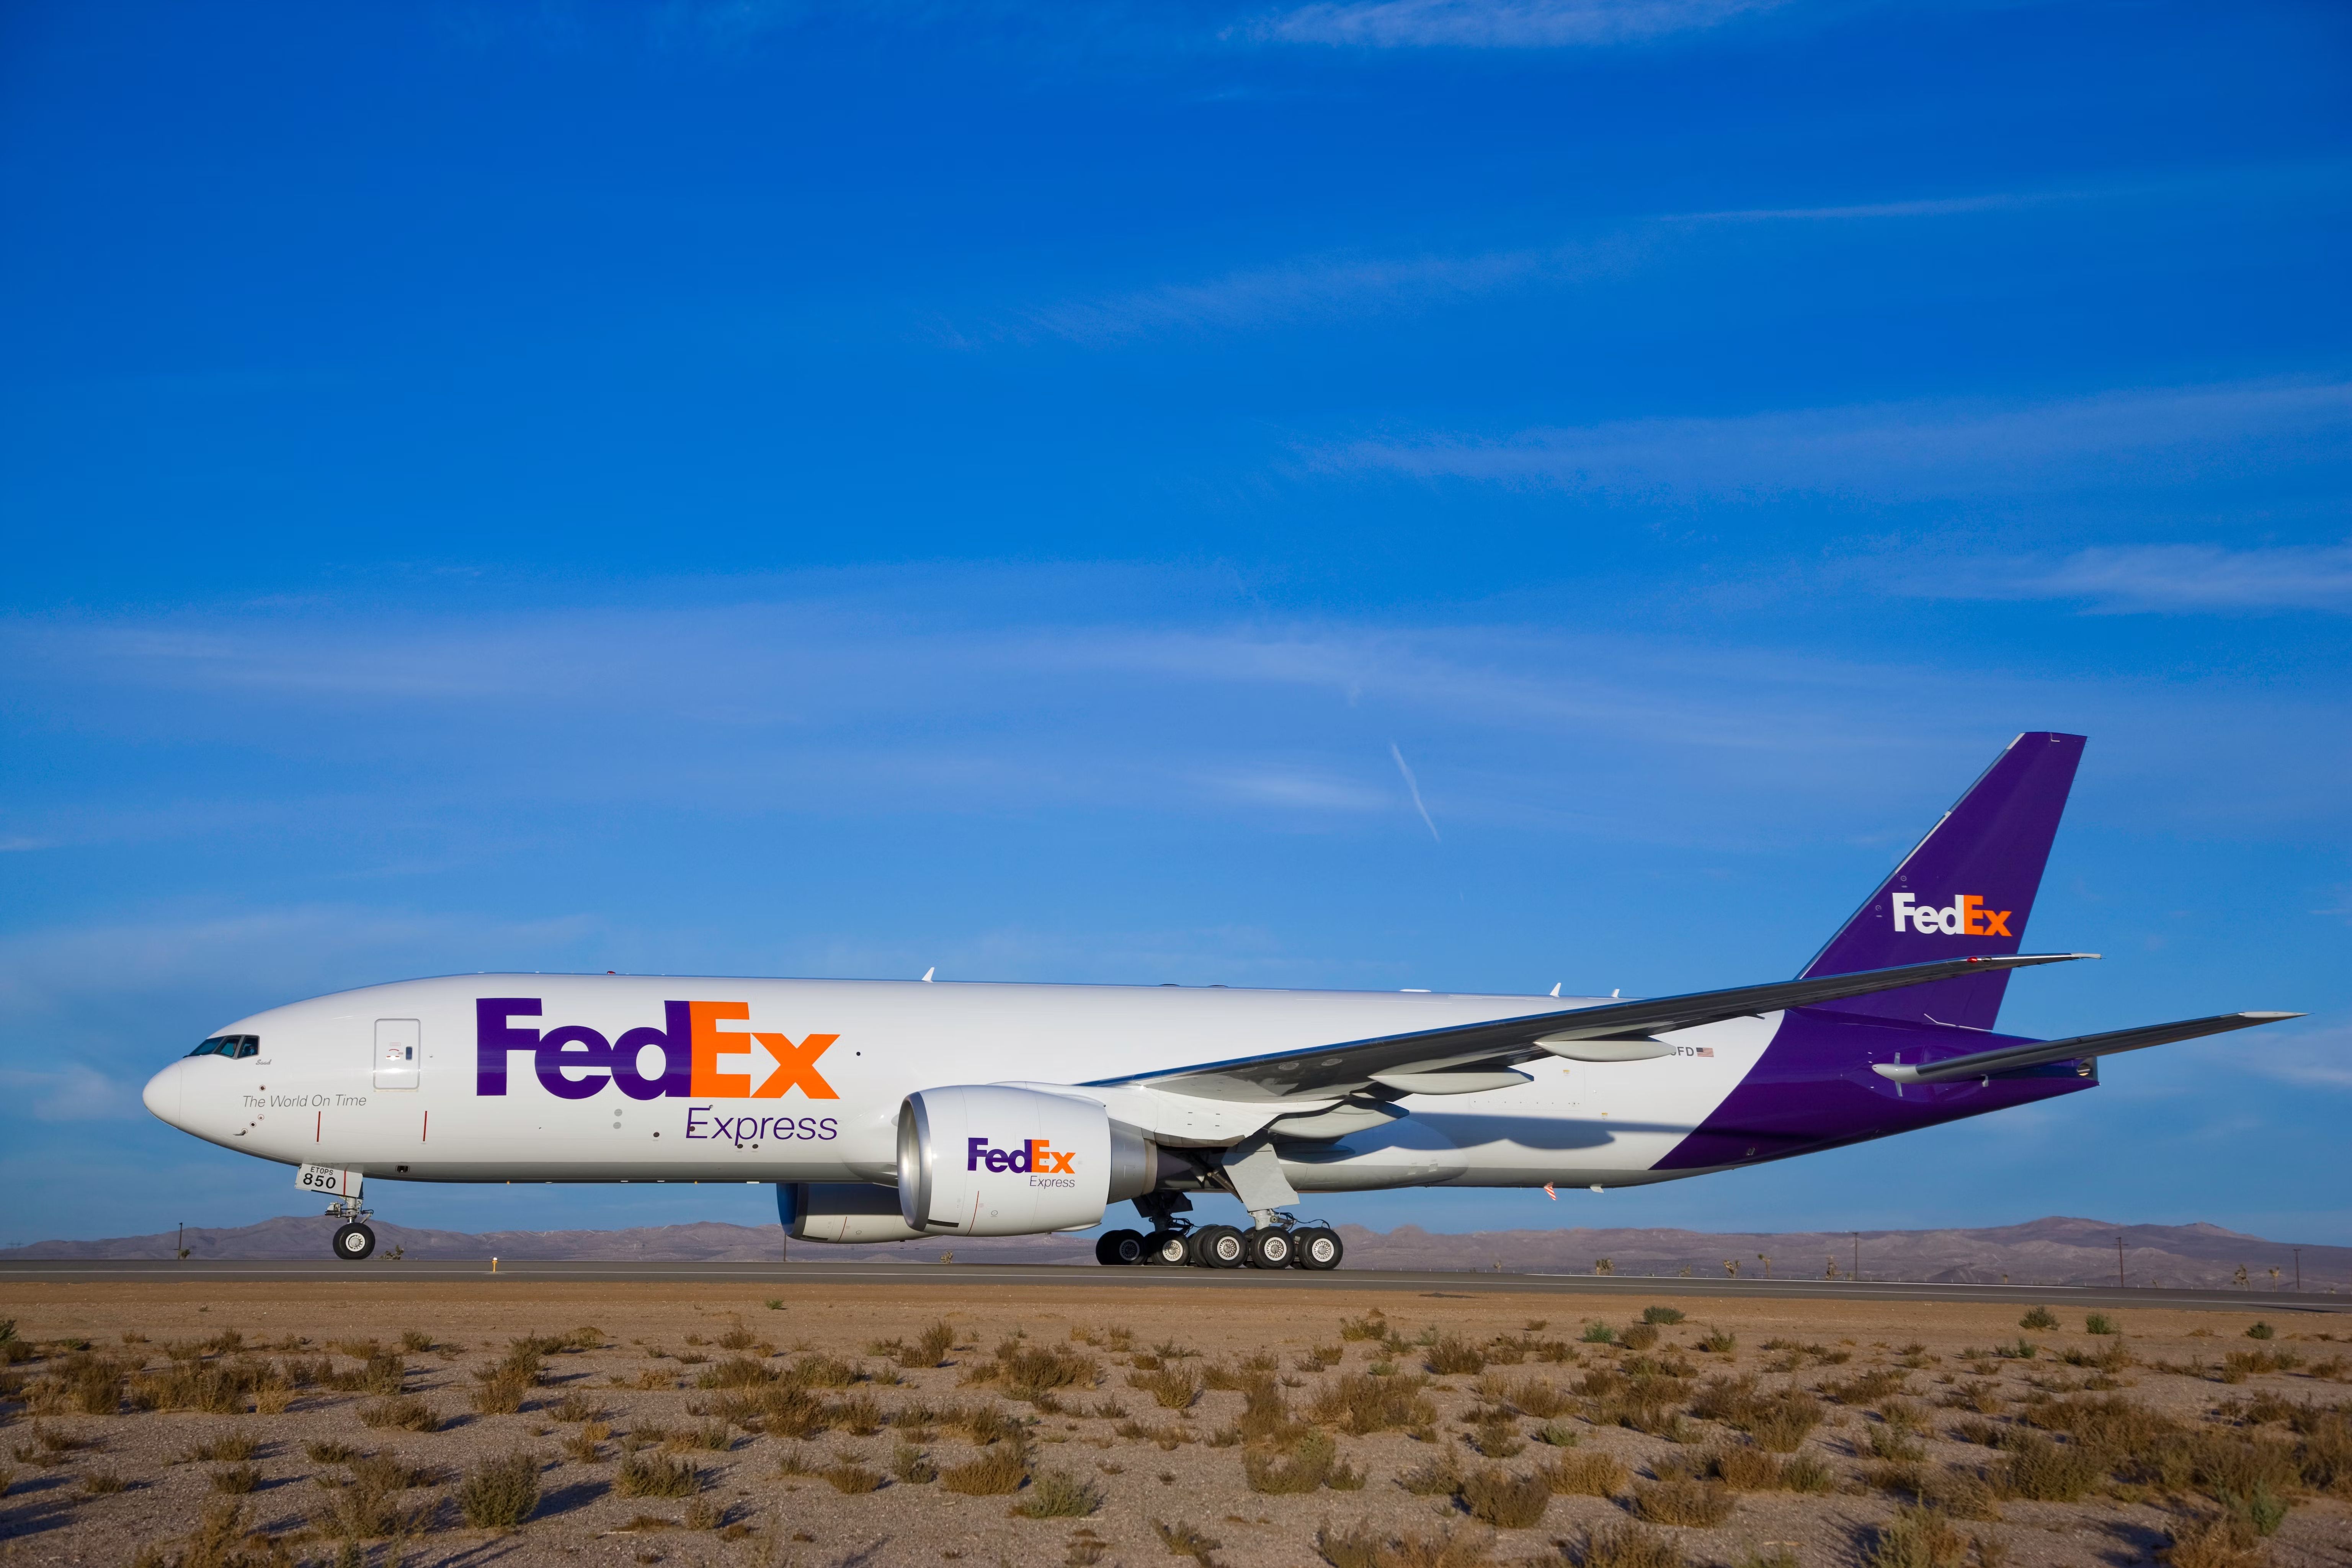 FedEx aircraft on the runway